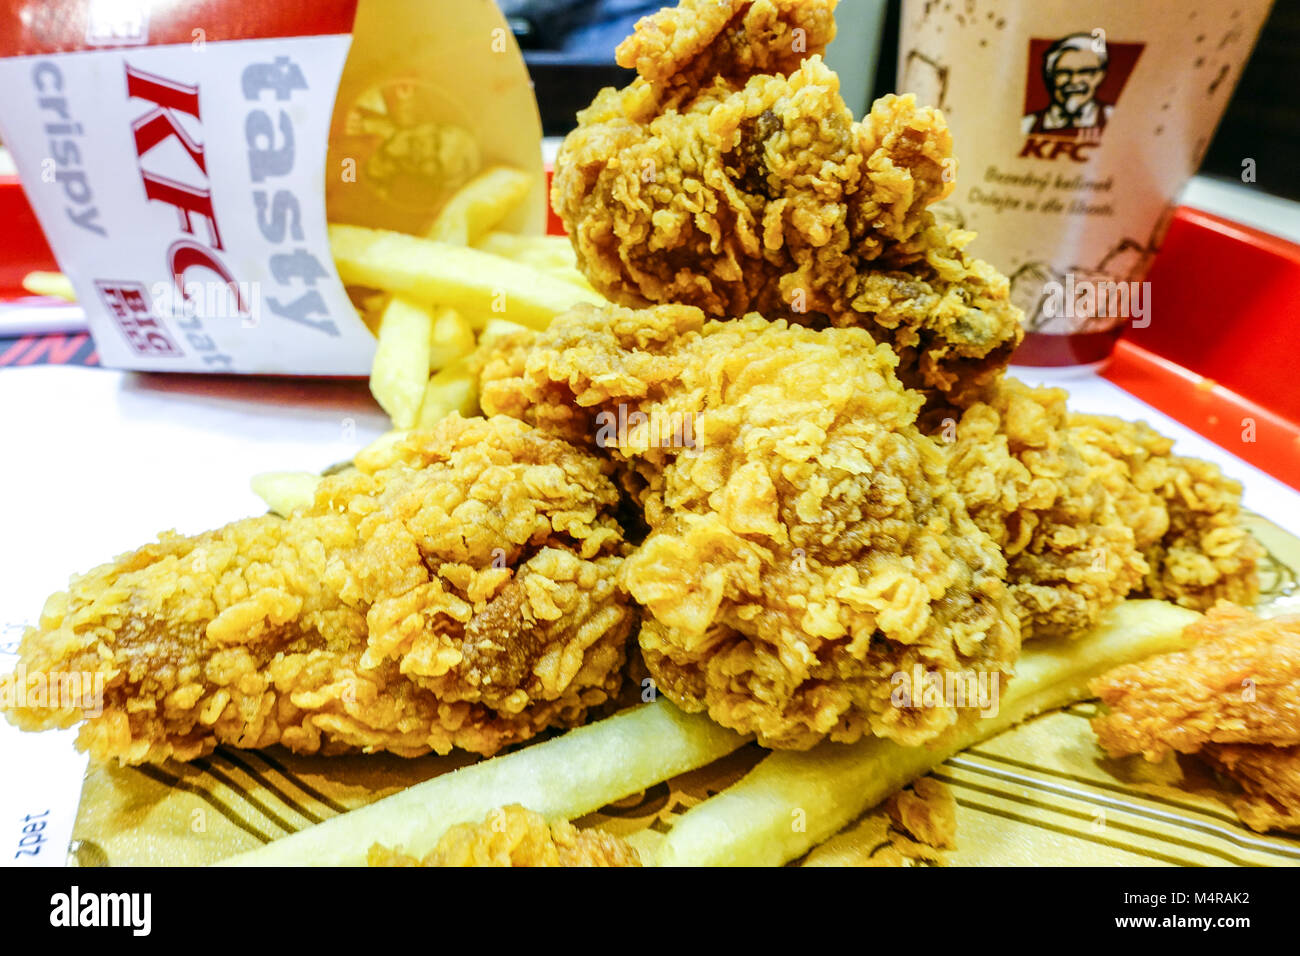 KFC meal Menu, Fried, Kentucky Fried Chicken, Food, Hot wings Stock Photo